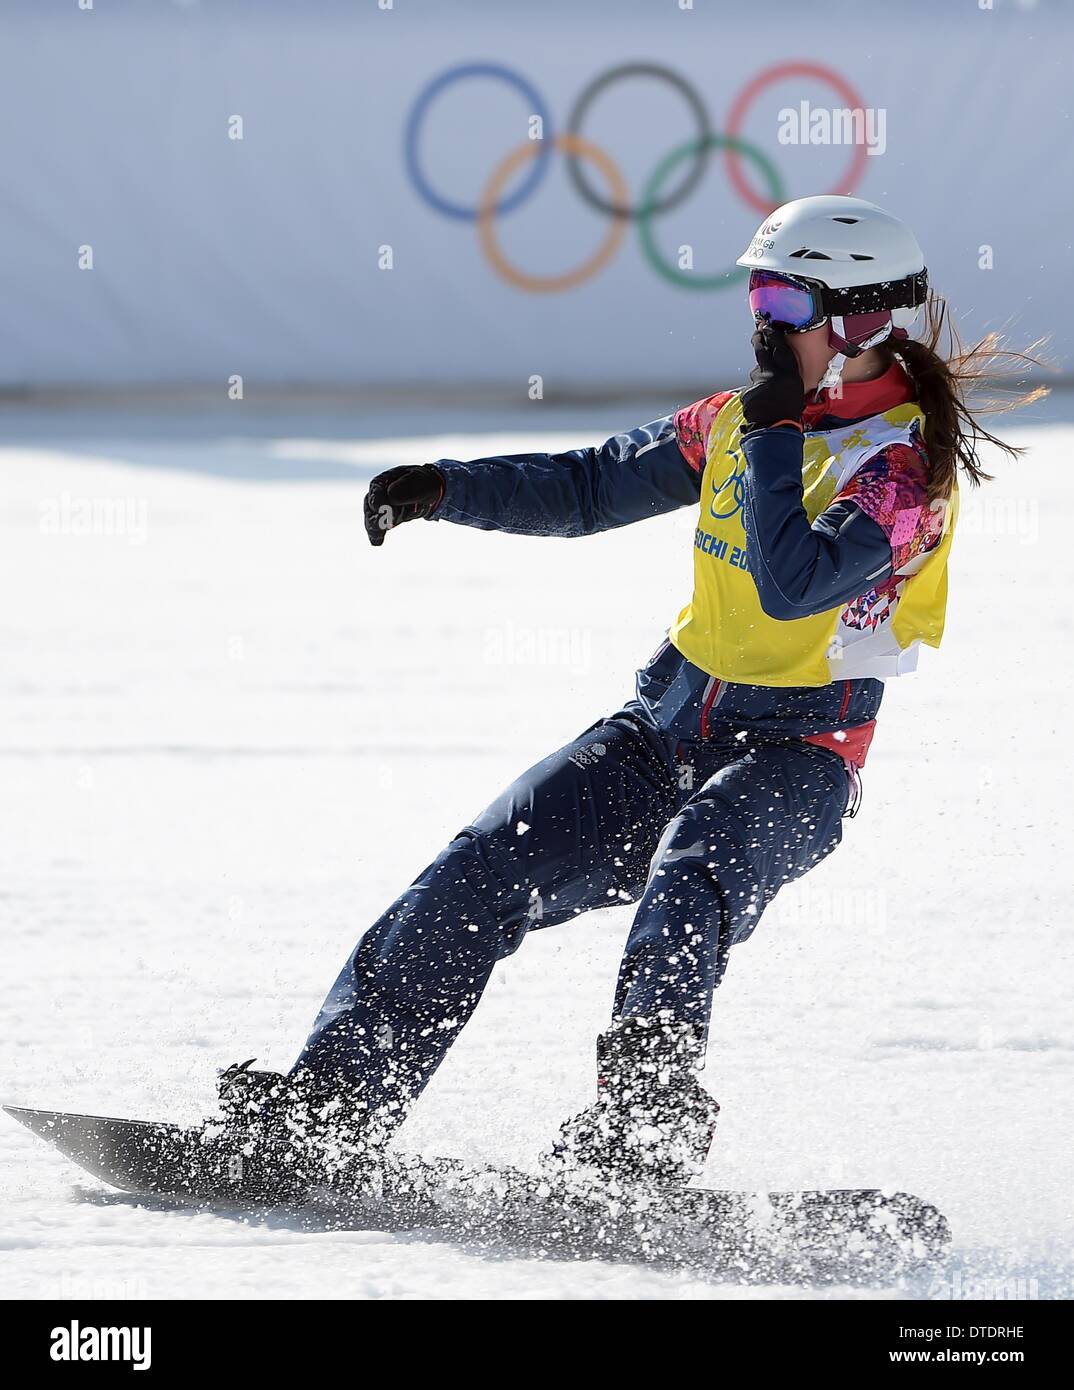 Zoe Gillings (GBR, gelb) erhält 3. Platz im kleinen Finale um 9. insgesamt zu beenden. Womens Snowbboard Cross - Rosa Khutor Extreme Park - Sotschi - Russland - 16.02.2014 Stockfoto